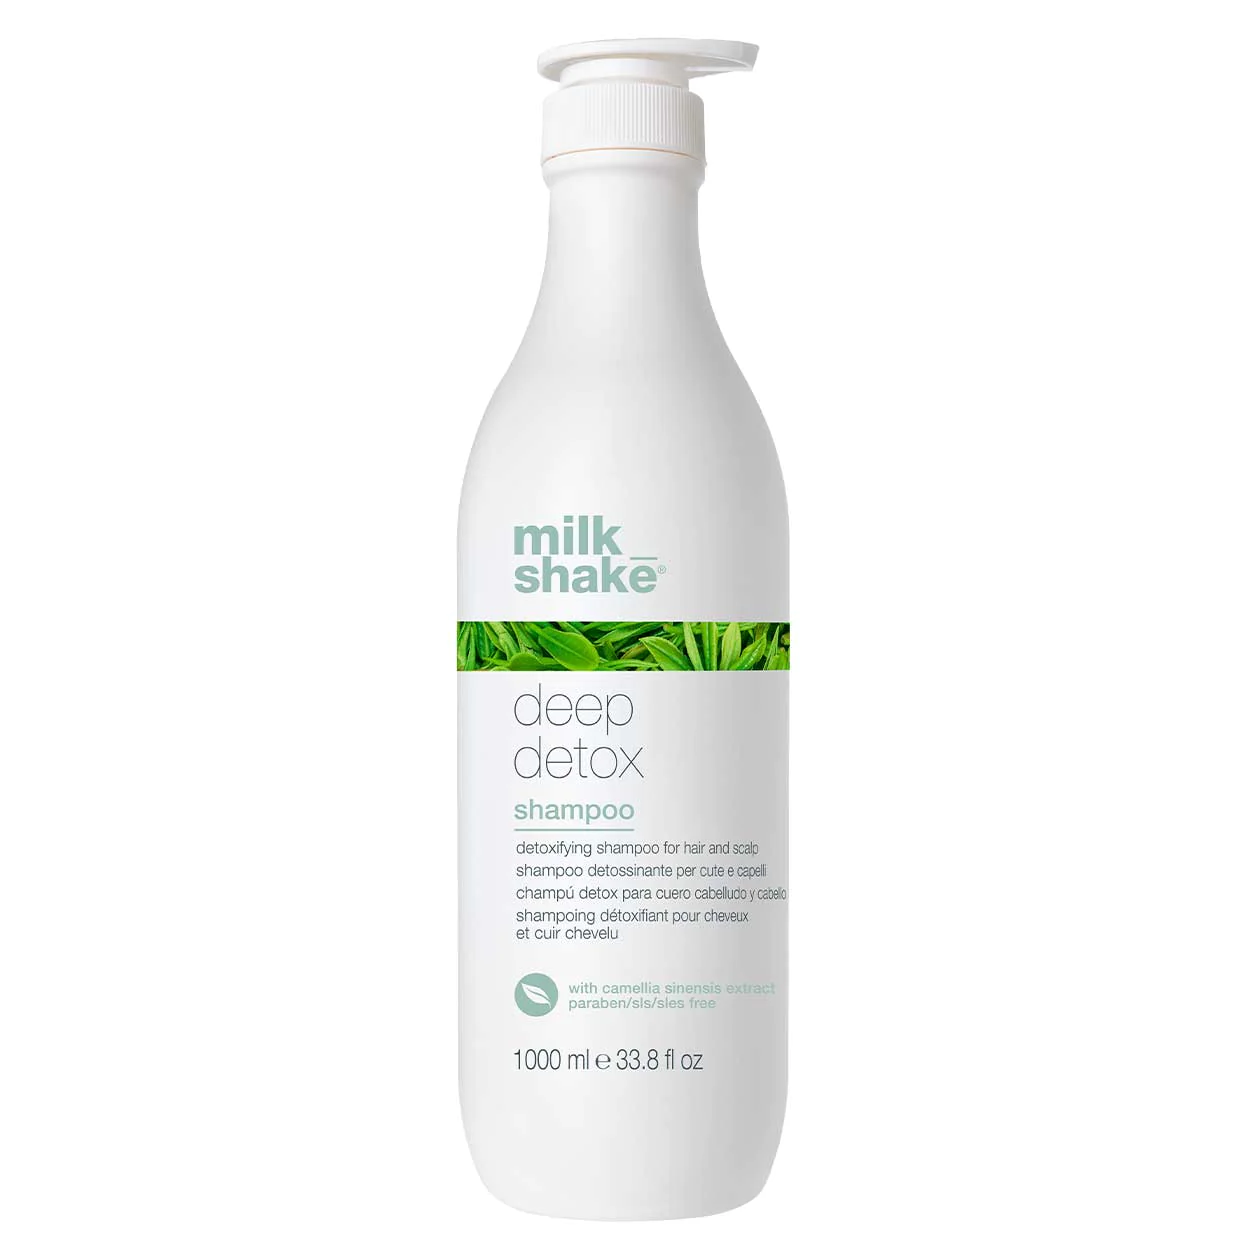 milk_shake deep detox shampoo 1 Litre size - detoxifying shampoo for scalp & hair. 